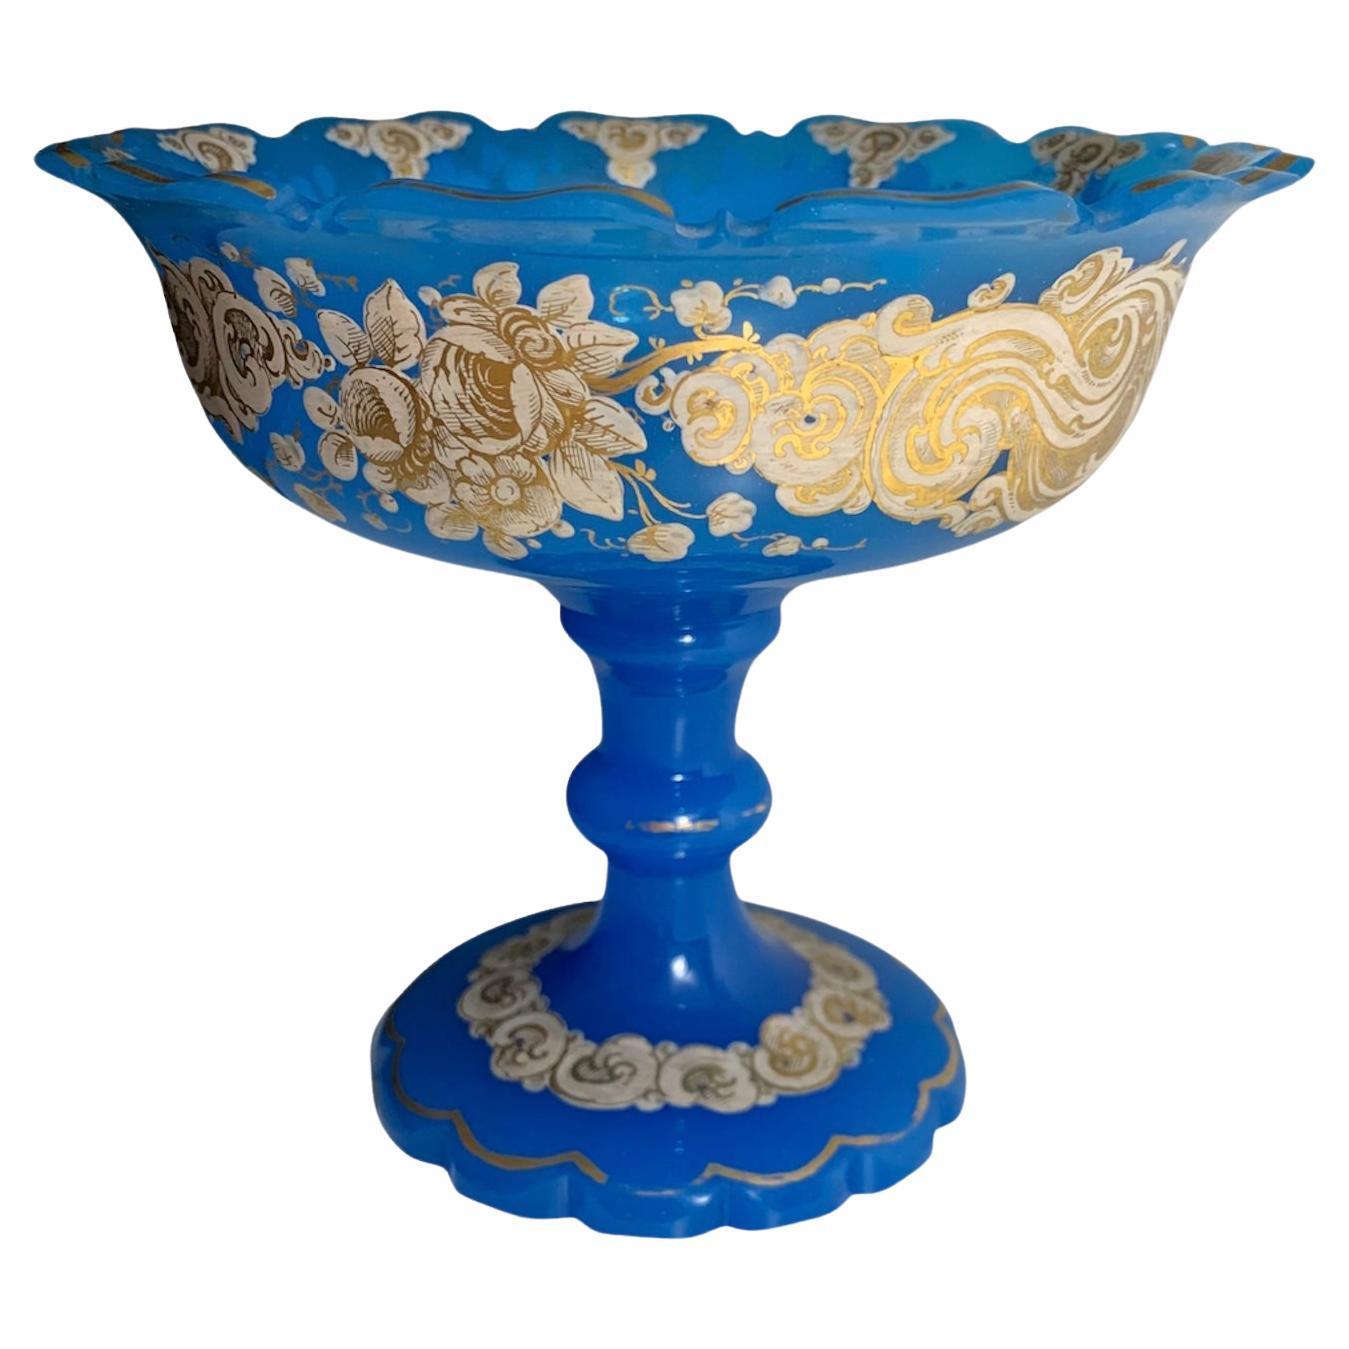 Antique Blue Opaline Enameled Glass Tazza Bowl, 19th Century